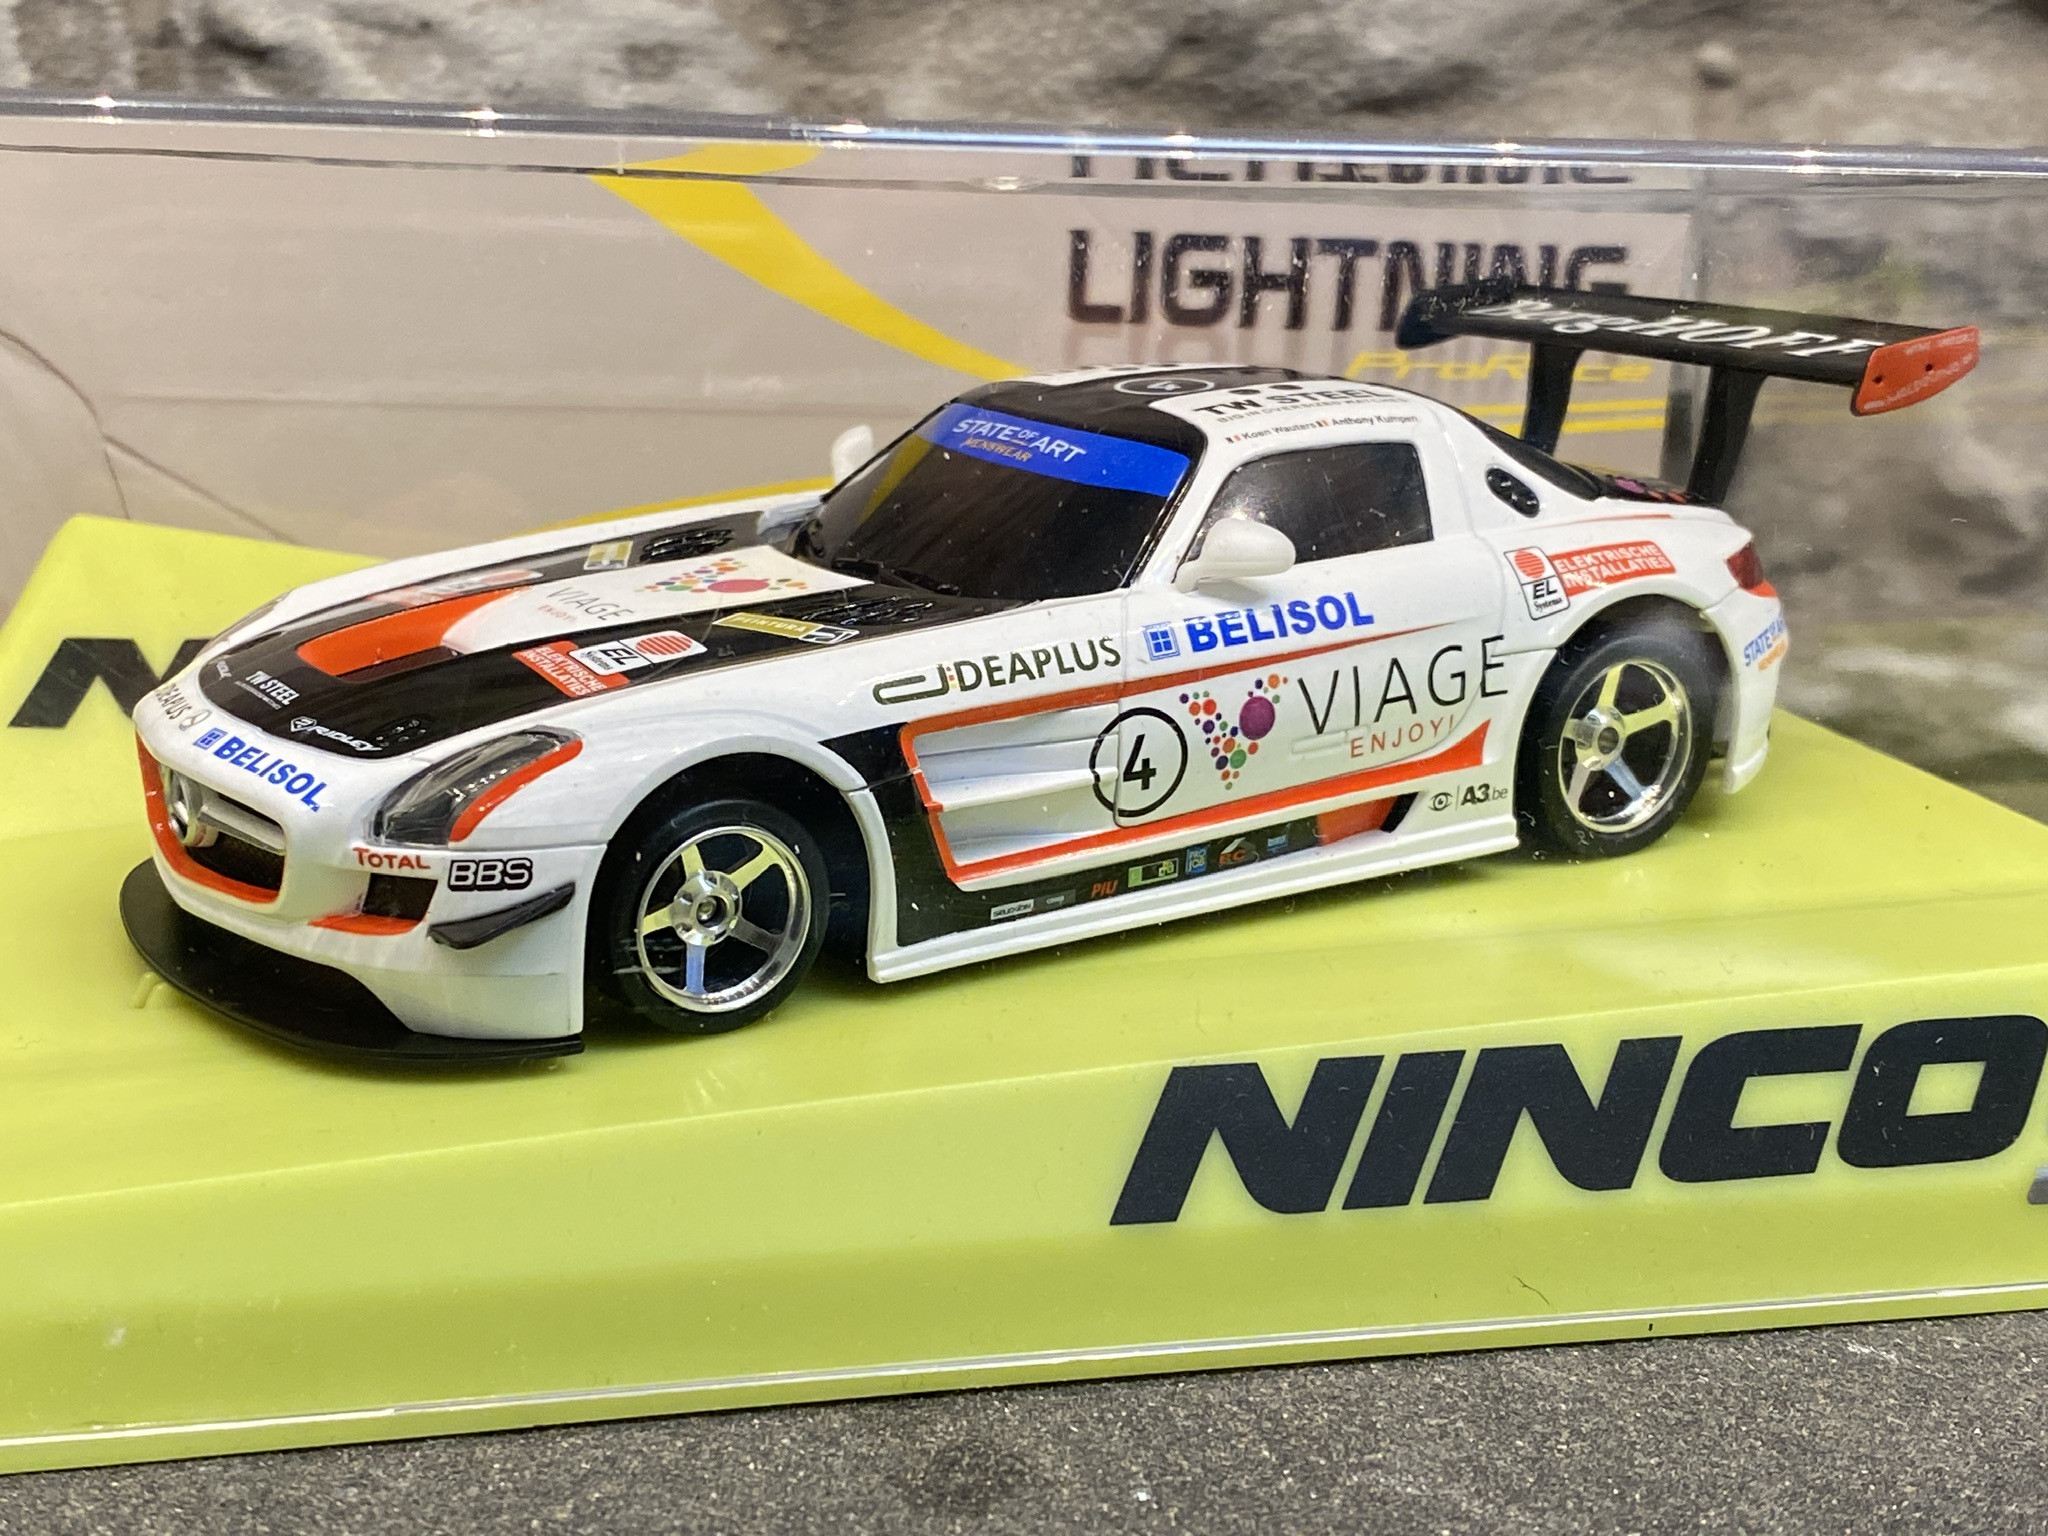 Skala 1/32 Analog Bil till Bilbana: Mercedes-Benz SLS GT3 - Viage, Lightning fr NINCO